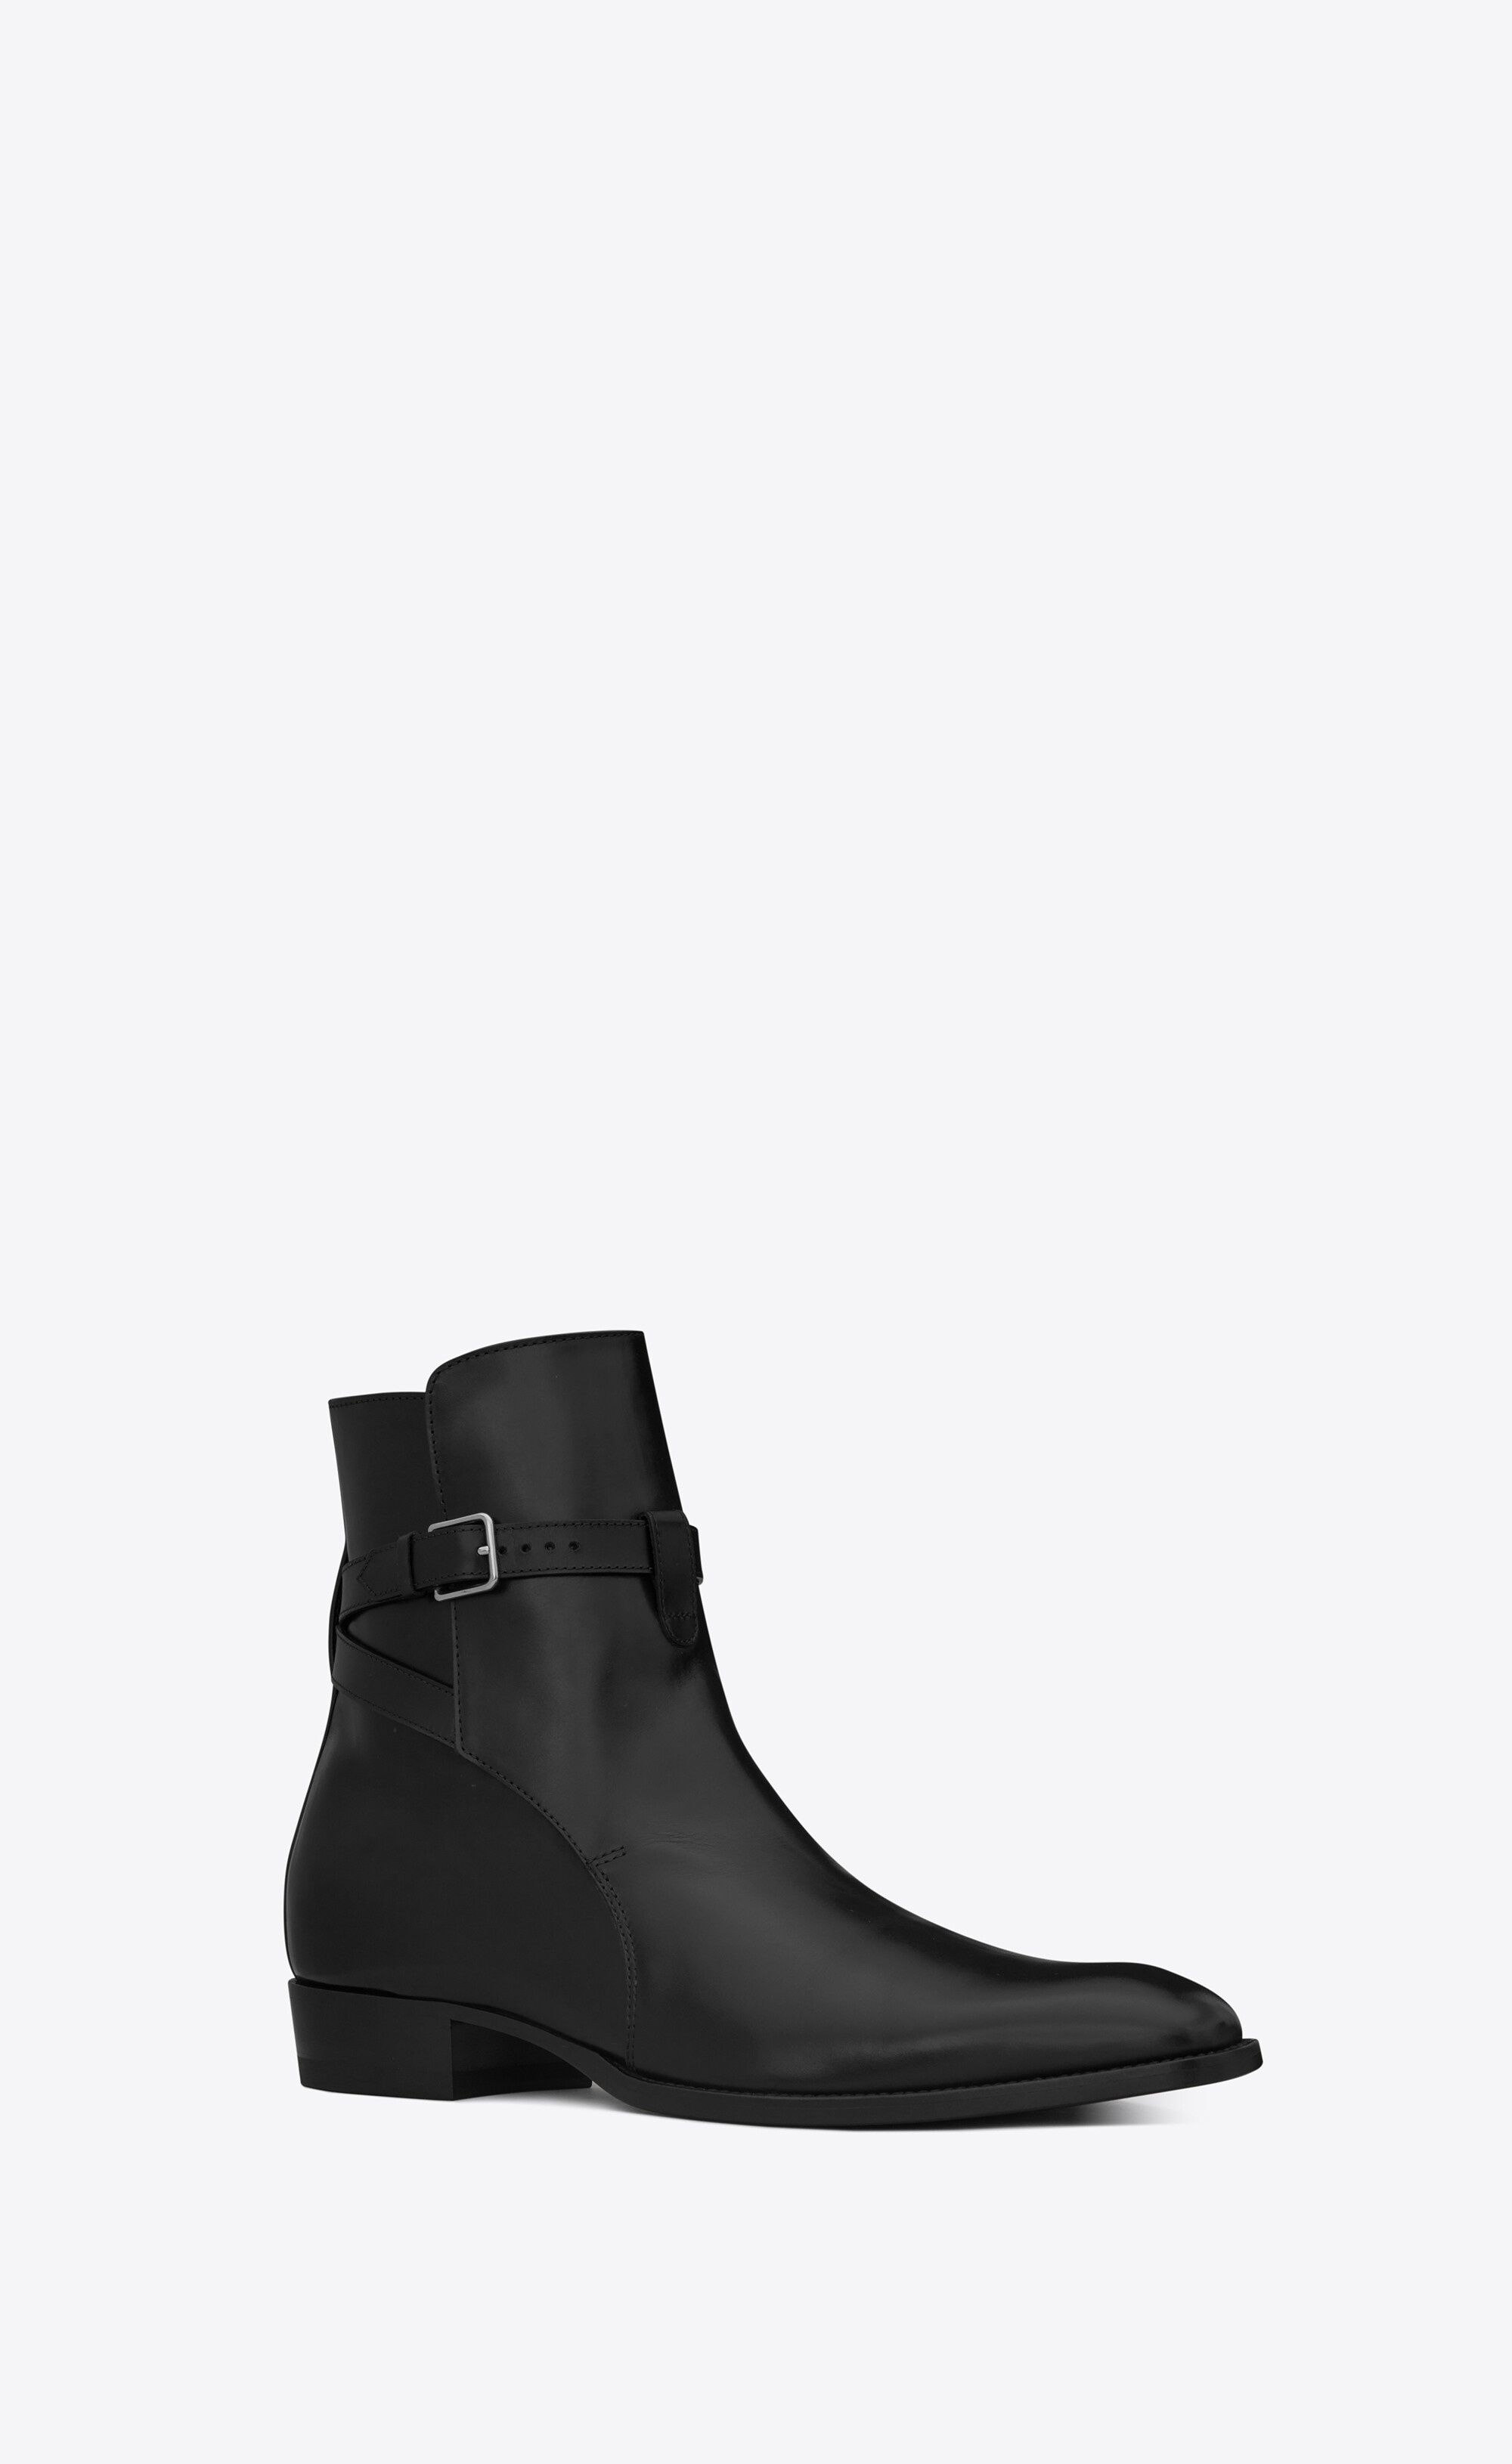 wyatt jodhpur boots in smooth leather - 3